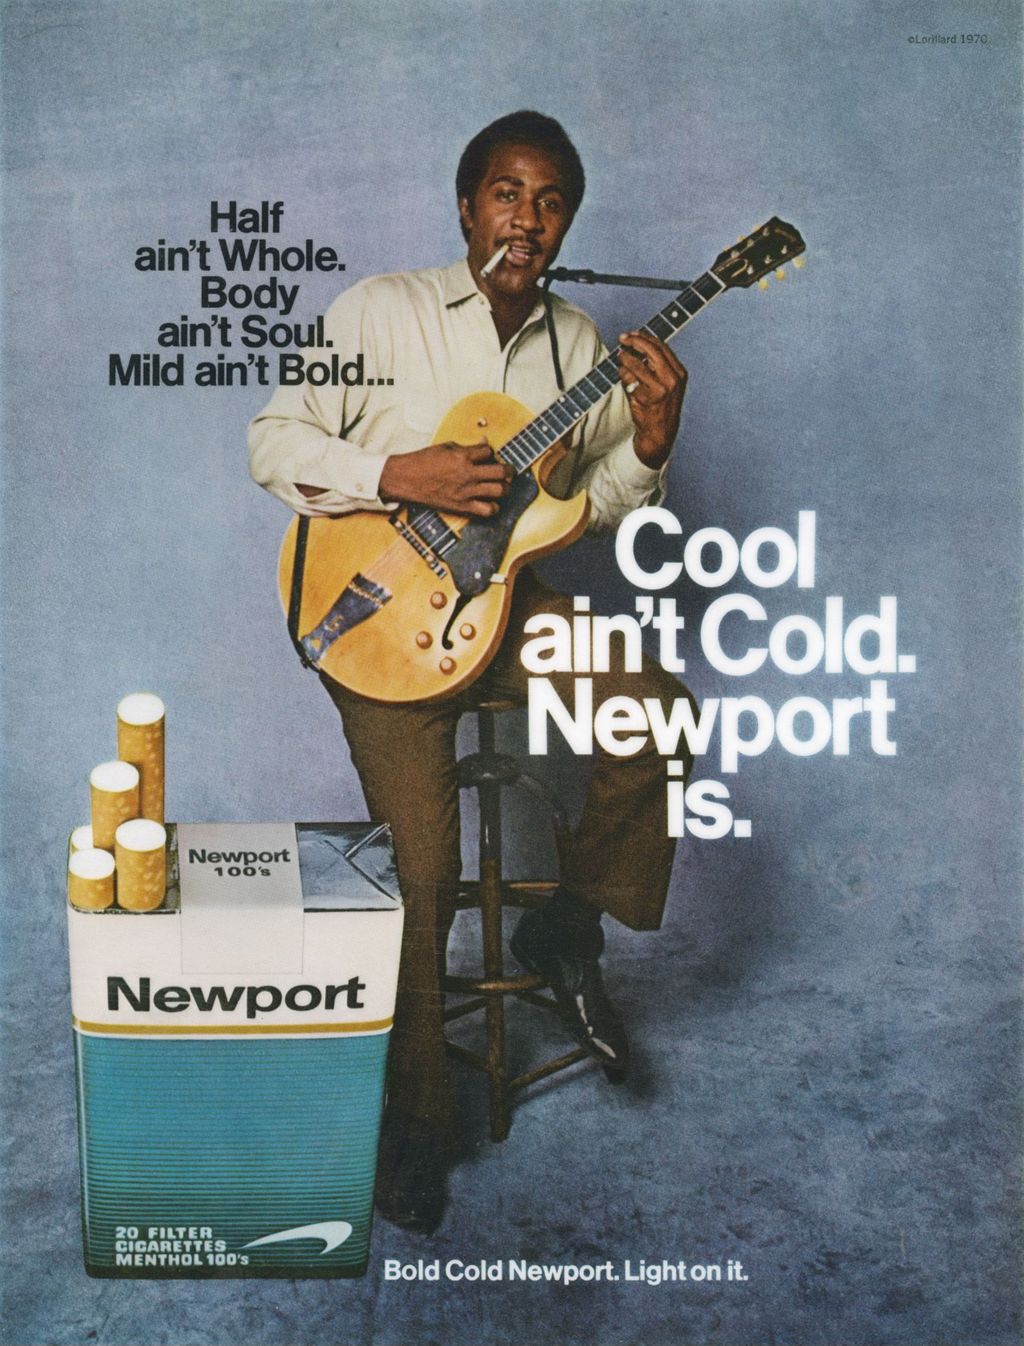 Cool ain't Cold, cigarette advertisement